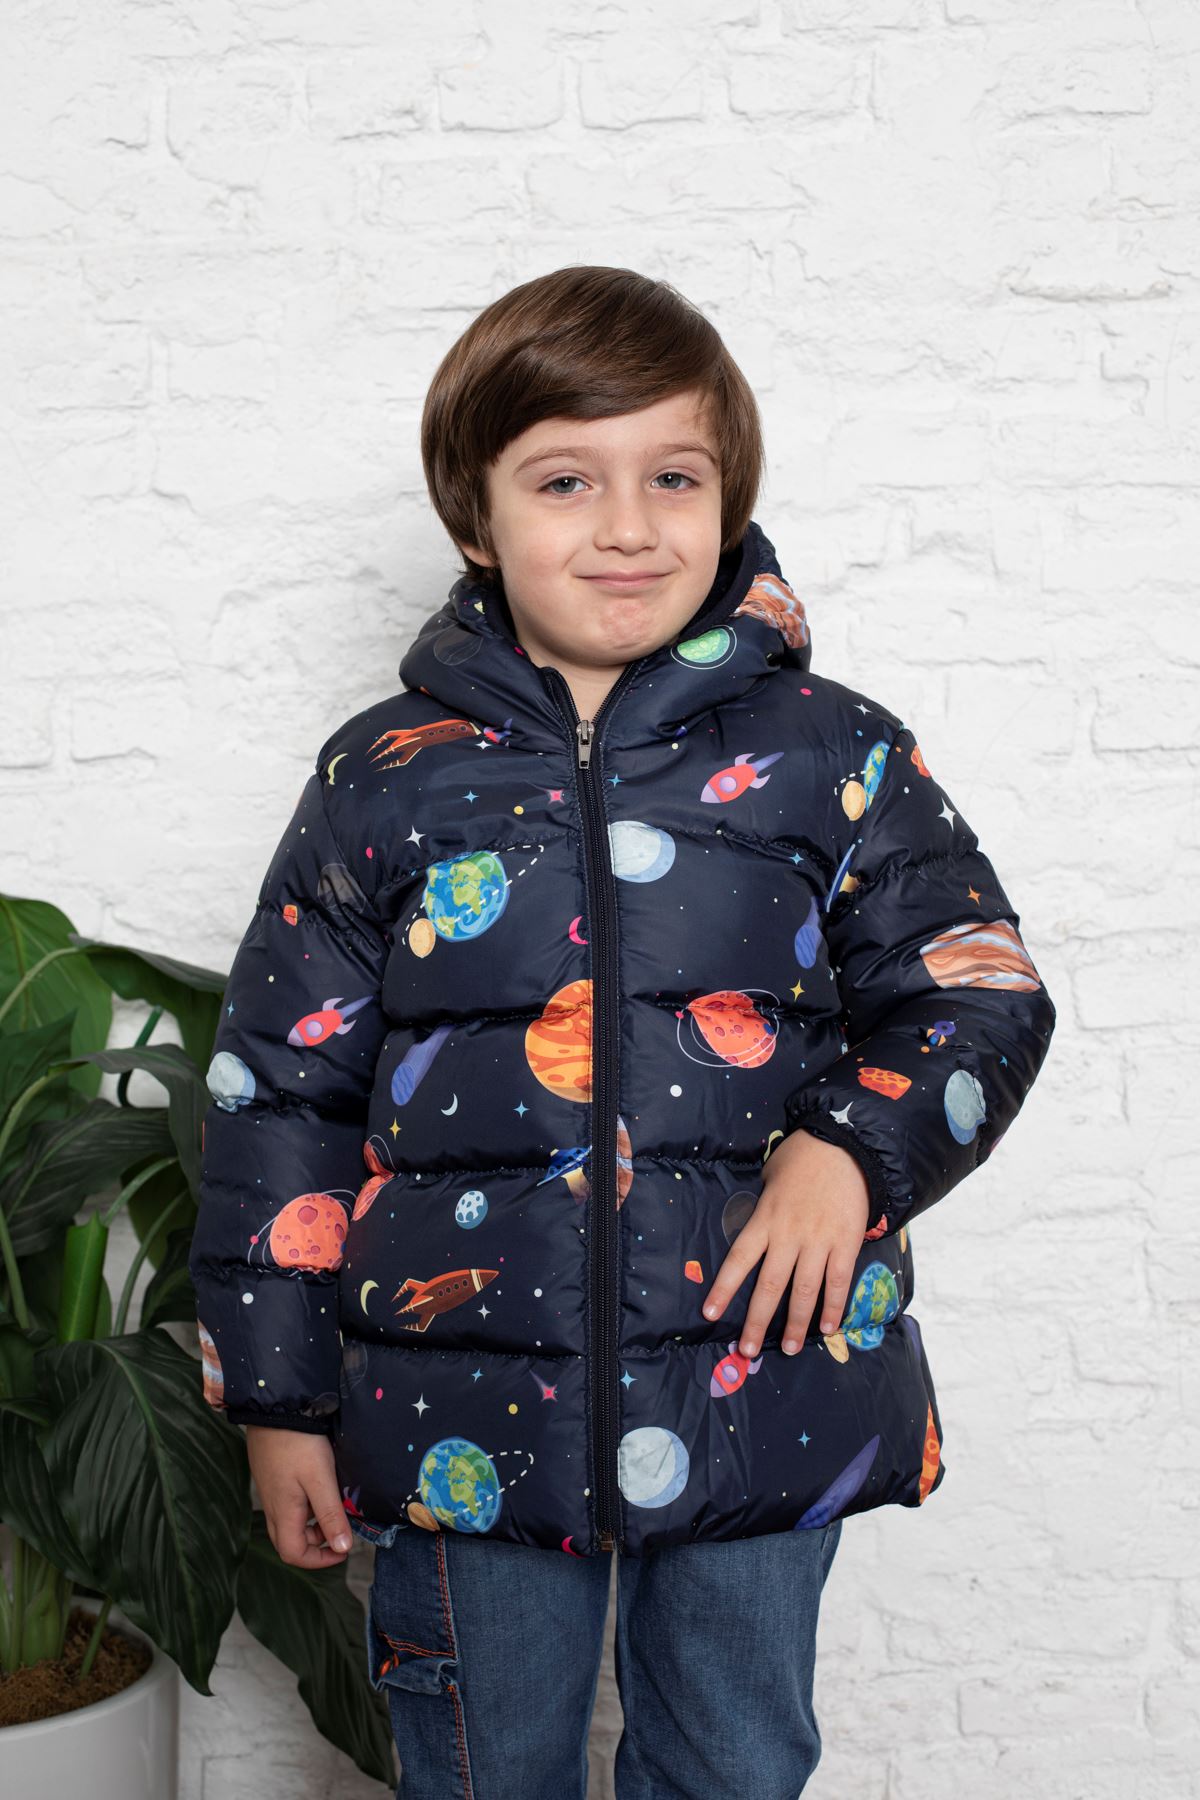 Planet Patterned Fleece Baby Coat